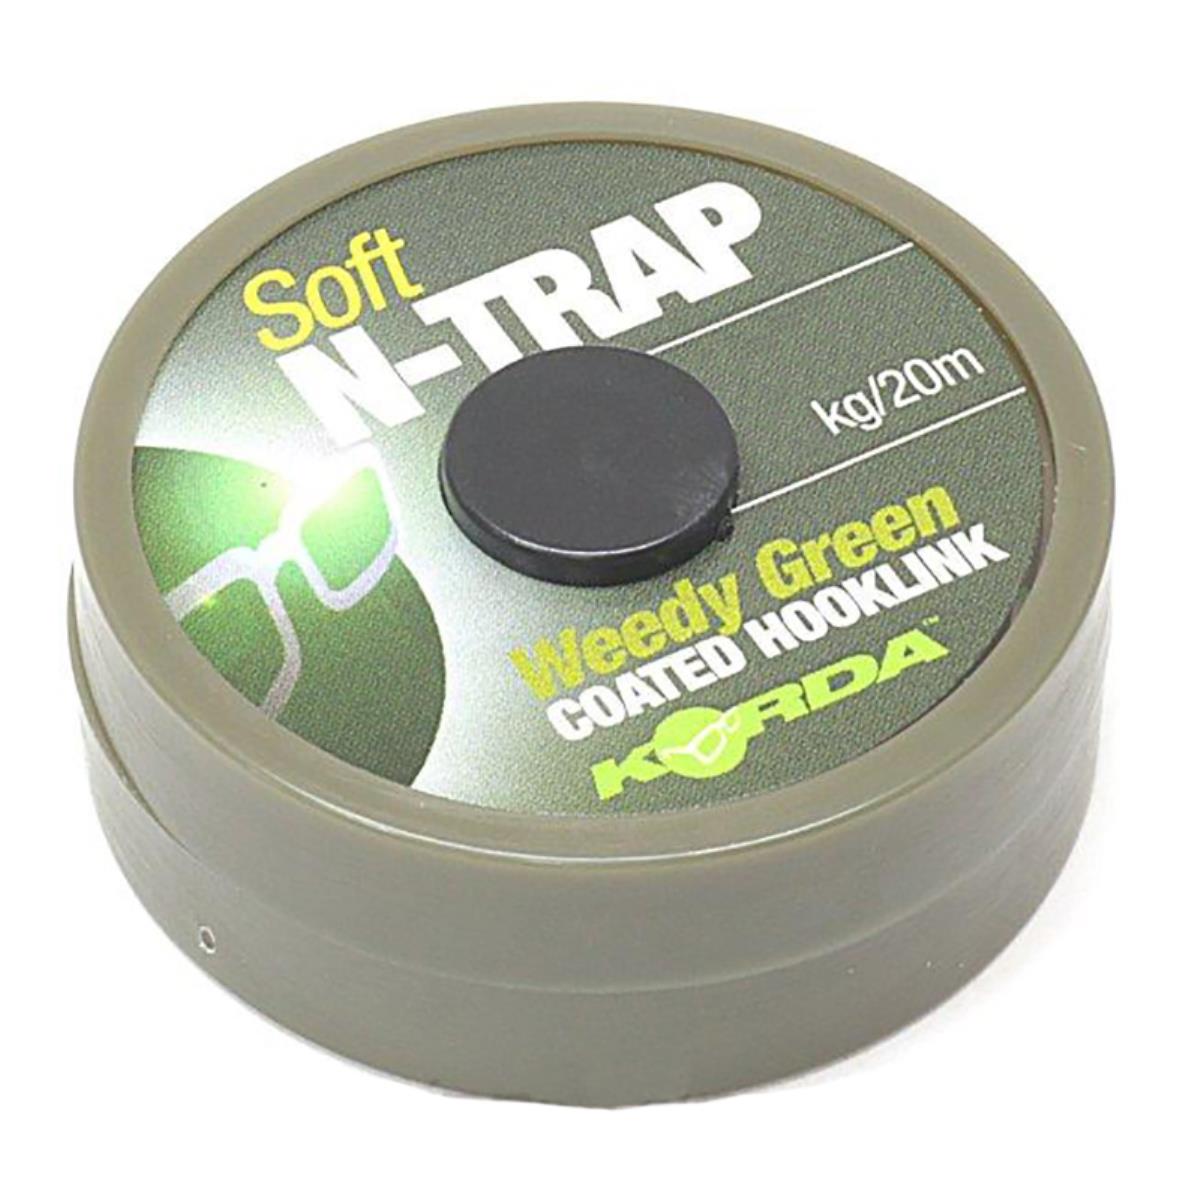 Поводковый материал N-Trap Semi-stiff 20lb Weedy Green Korda green поводок для собак